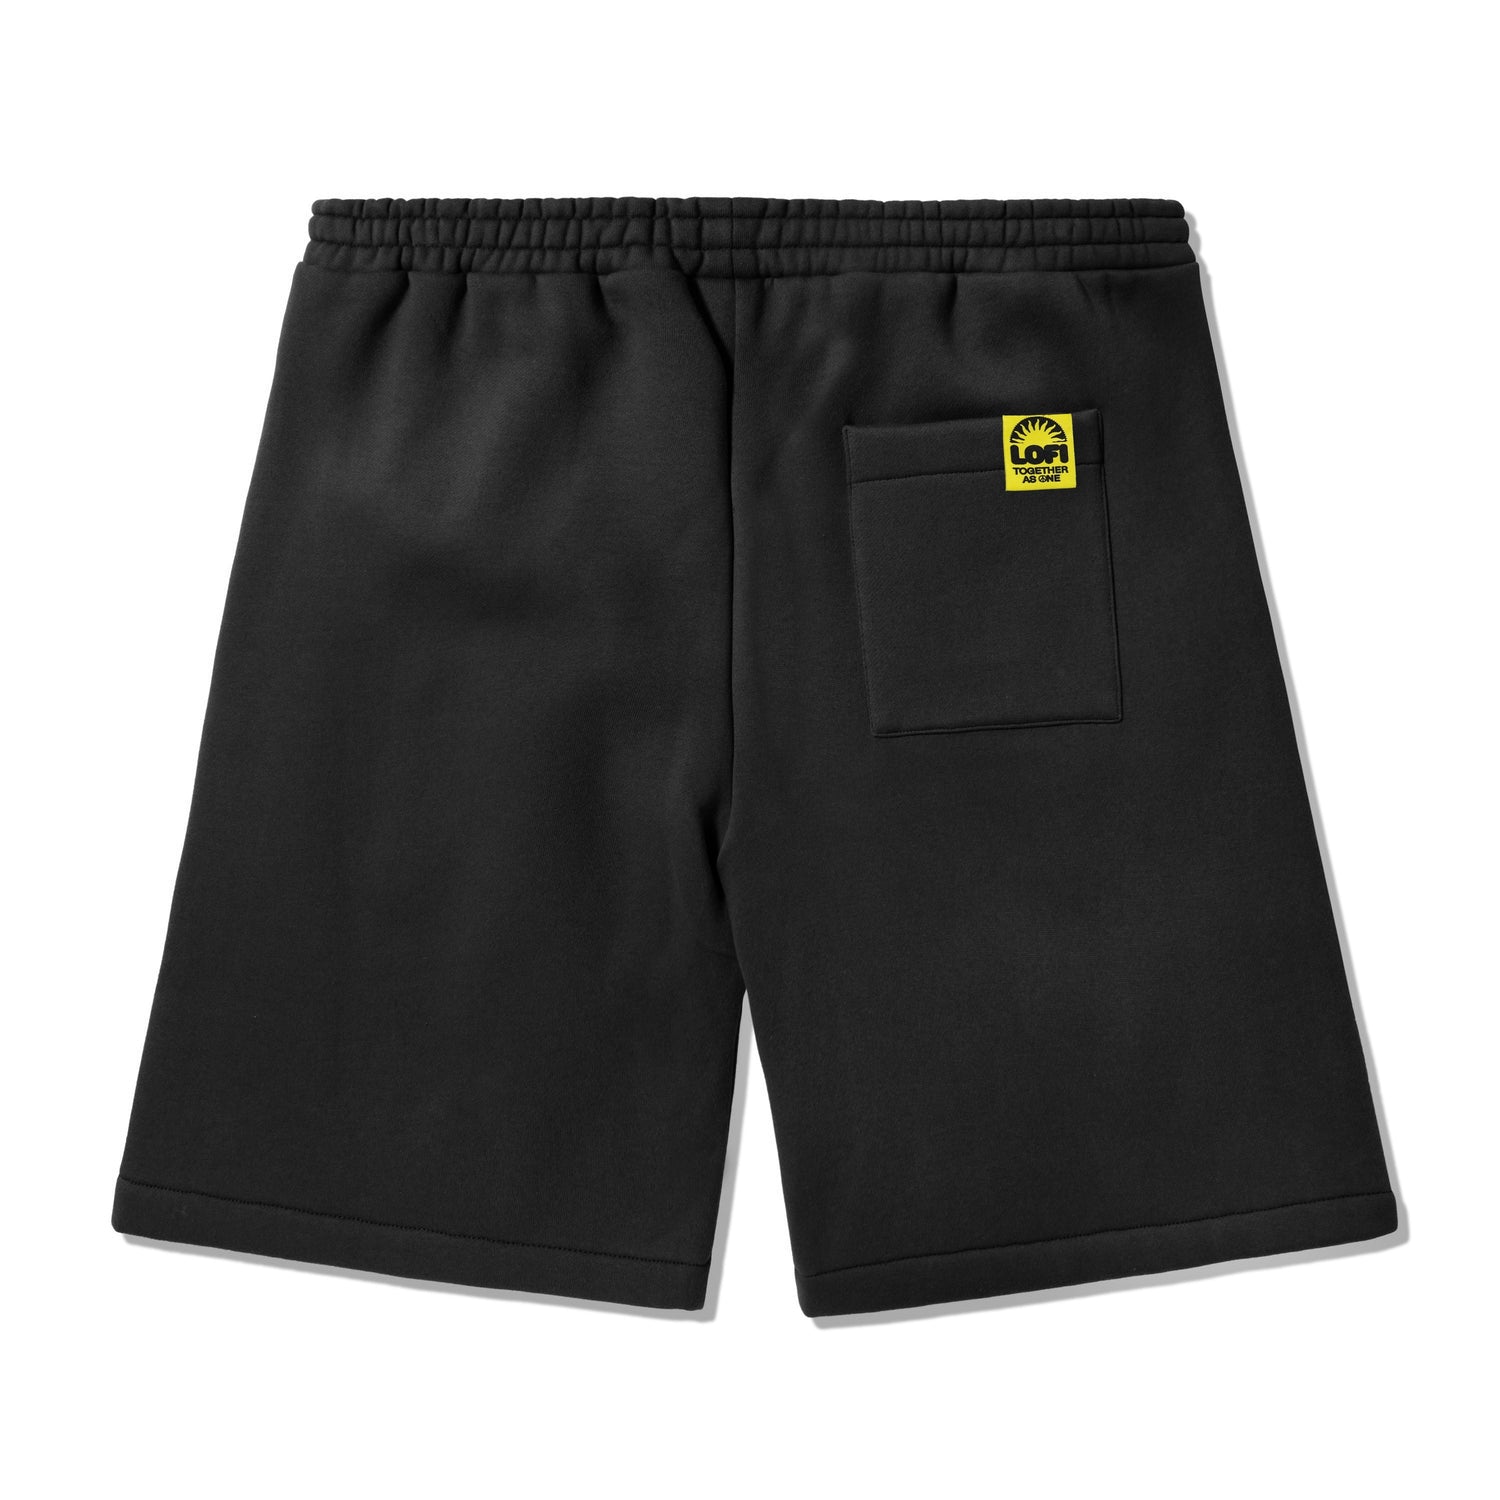 Short Order Shorts, Black